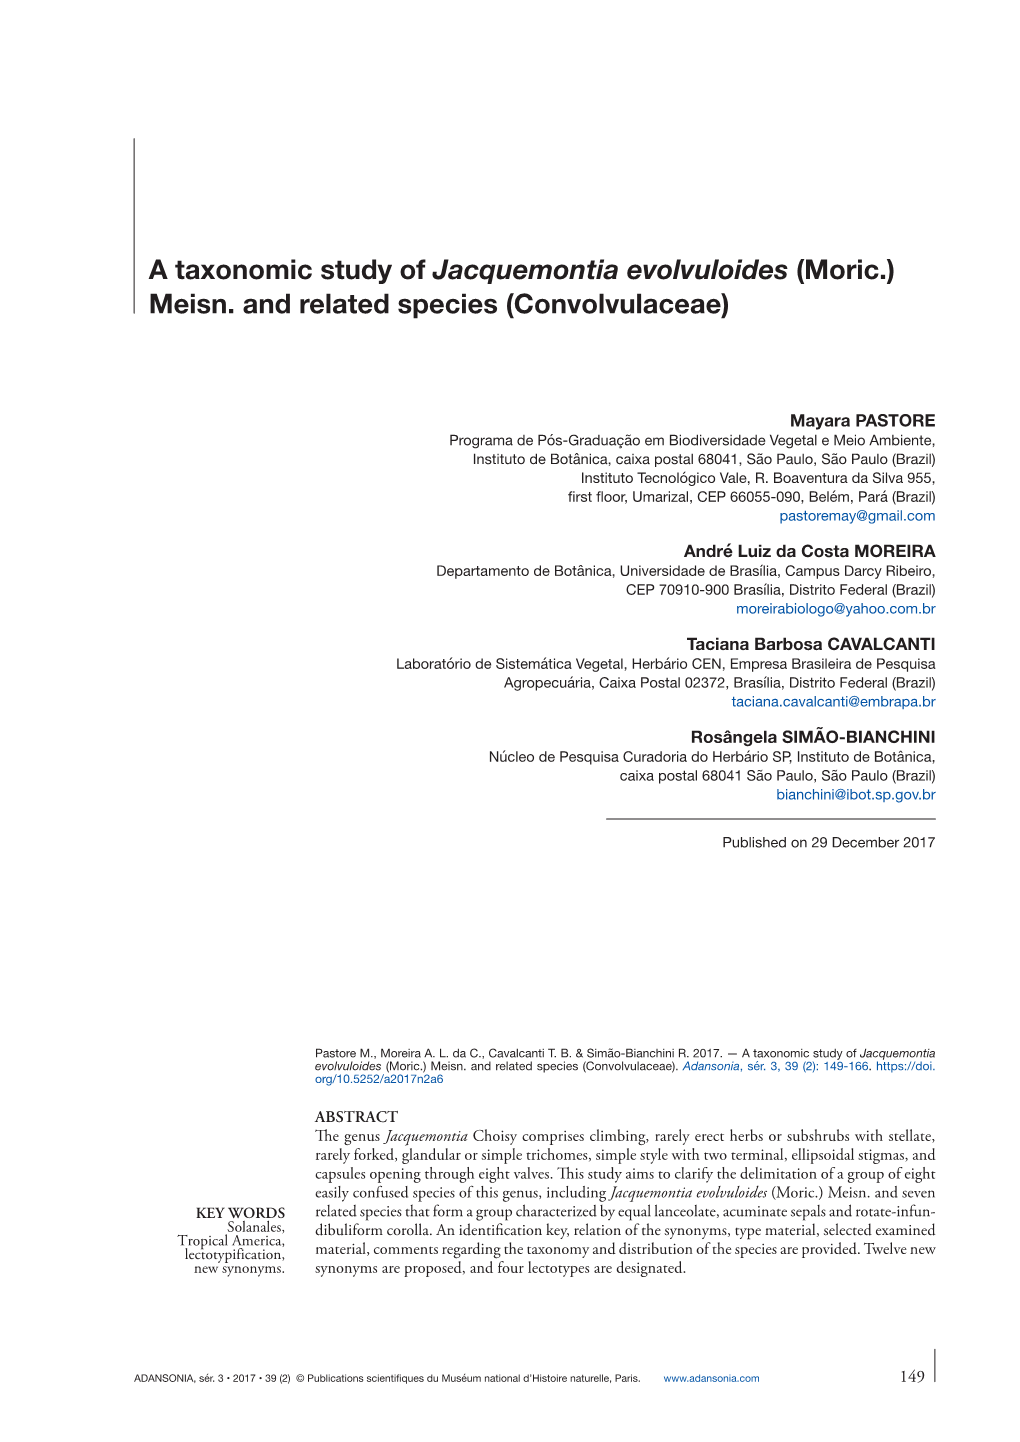 A Taxonomic Study of Jacquemontia Evolvuloides (Moric.) Meisn